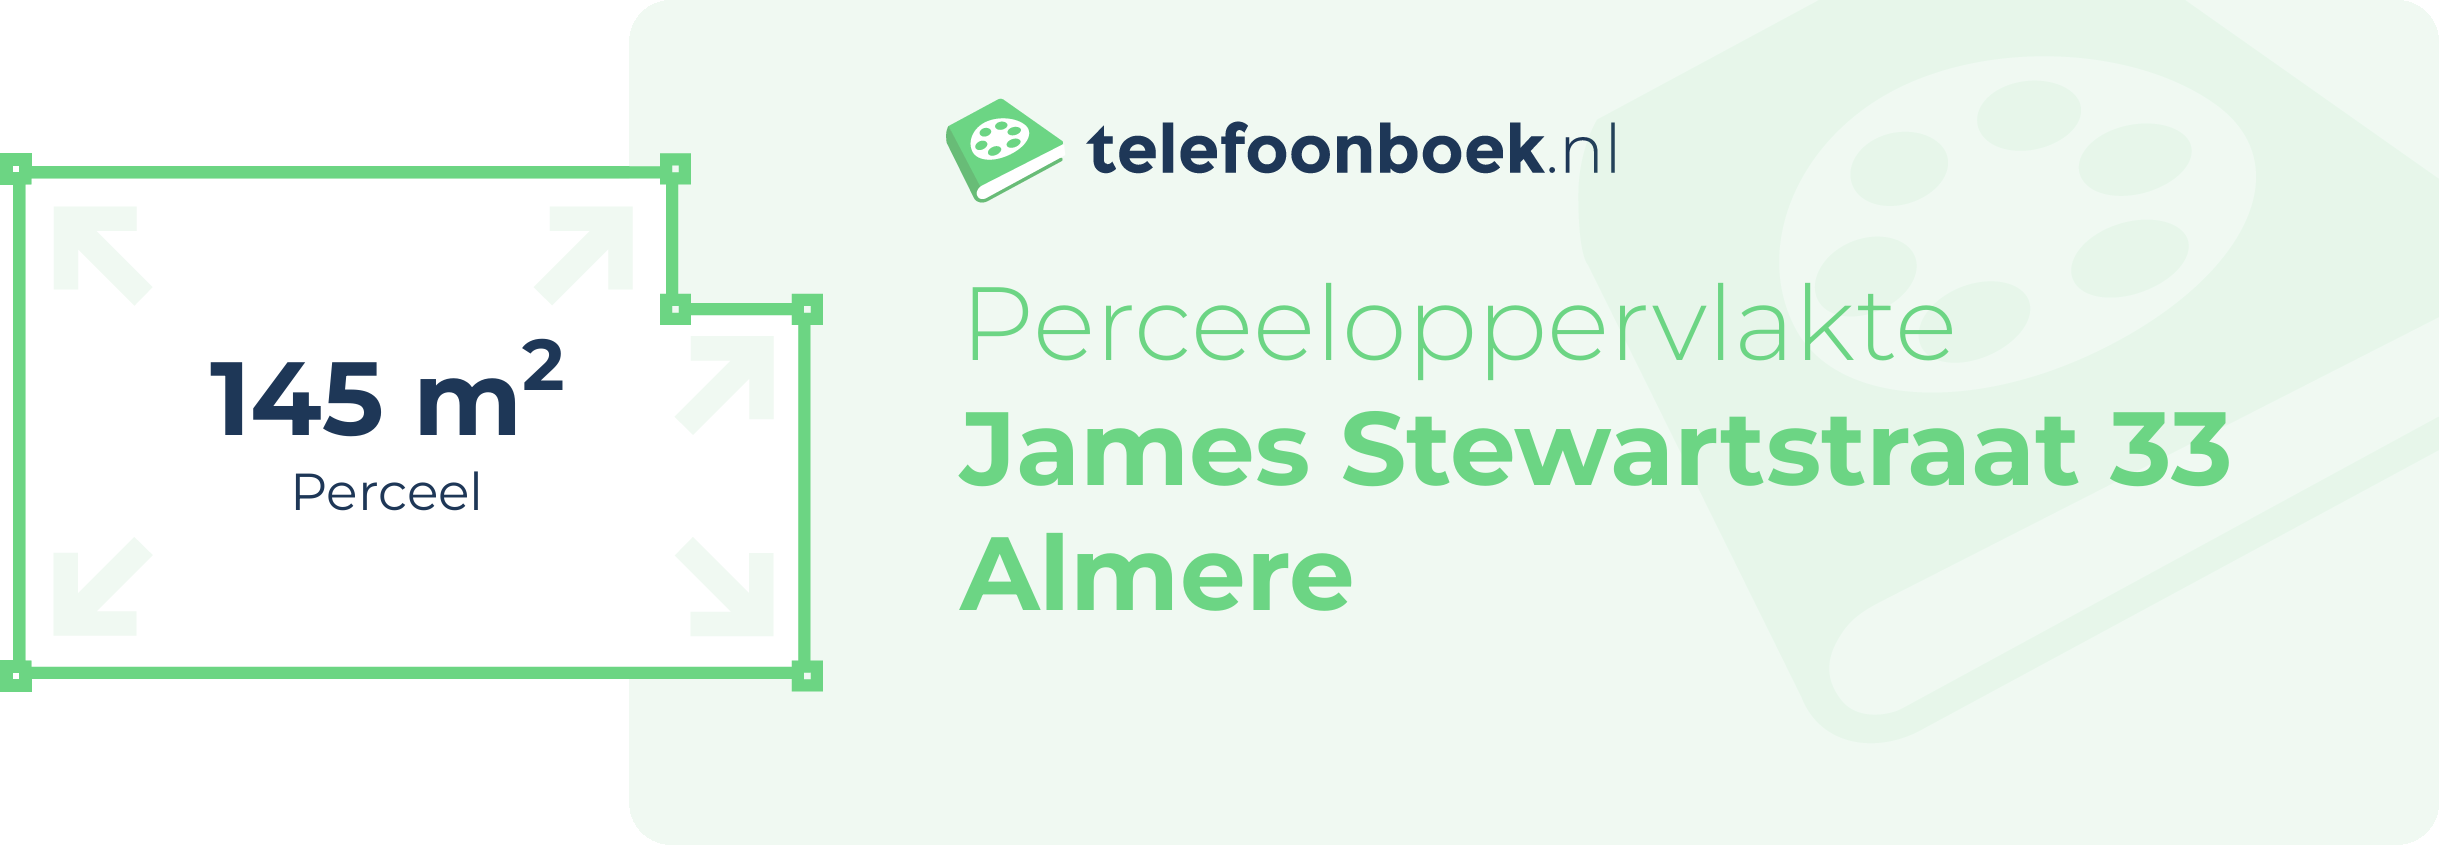 Perceeloppervlakte James Stewartstraat 33 Almere